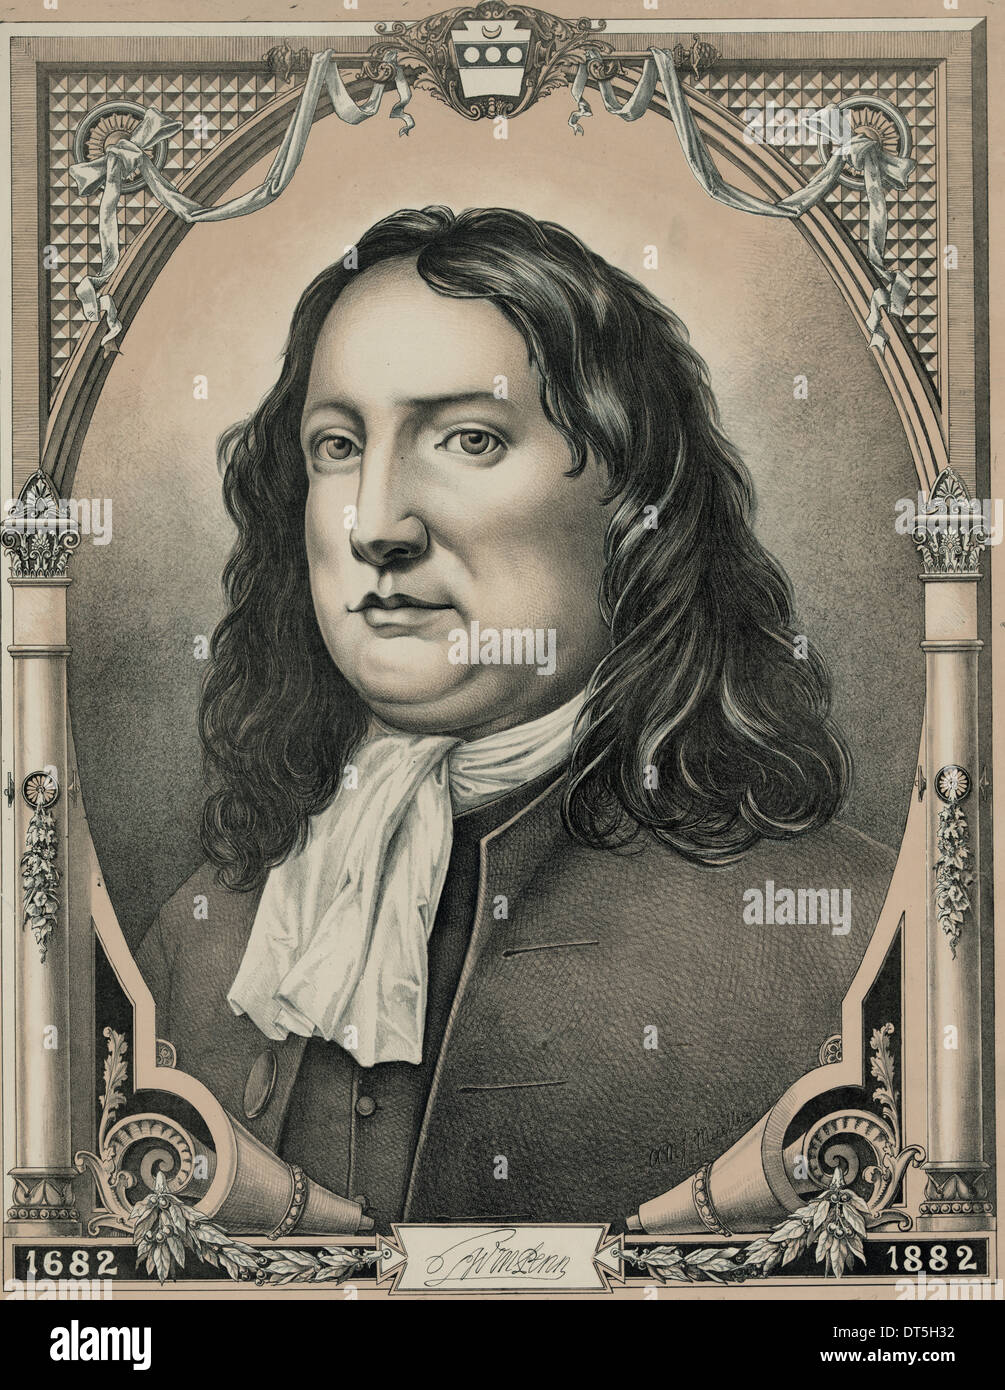 William Penn, entrepreneur, philosopher, Quaker, 1644 - 1718 Stock Photo